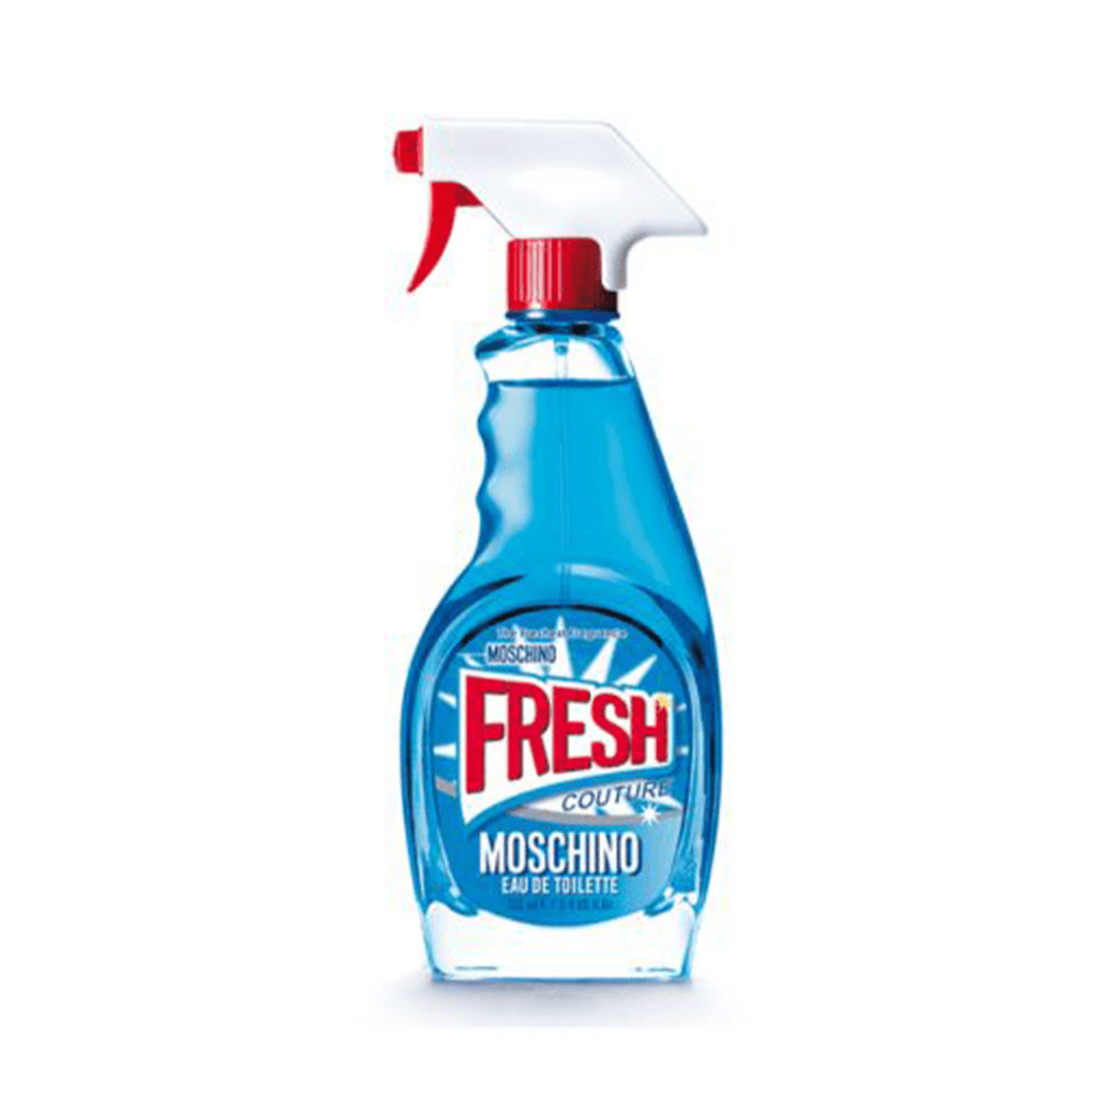 Moschino Fresh Couture Eau de Toilette Spray